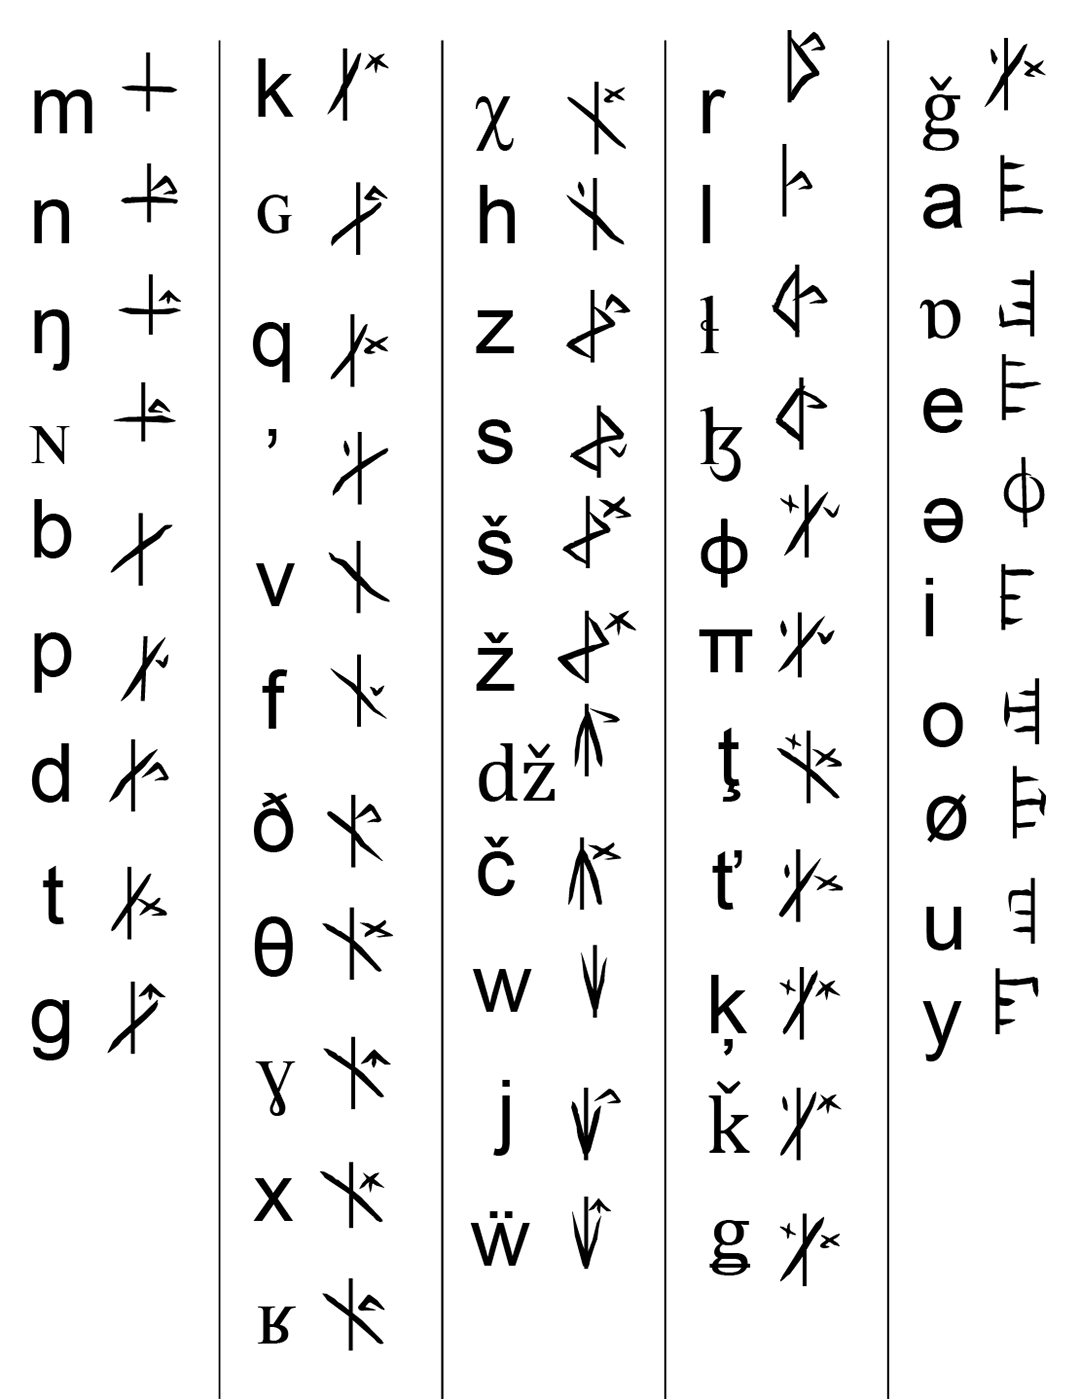 Vertical Phyrexian alphabet